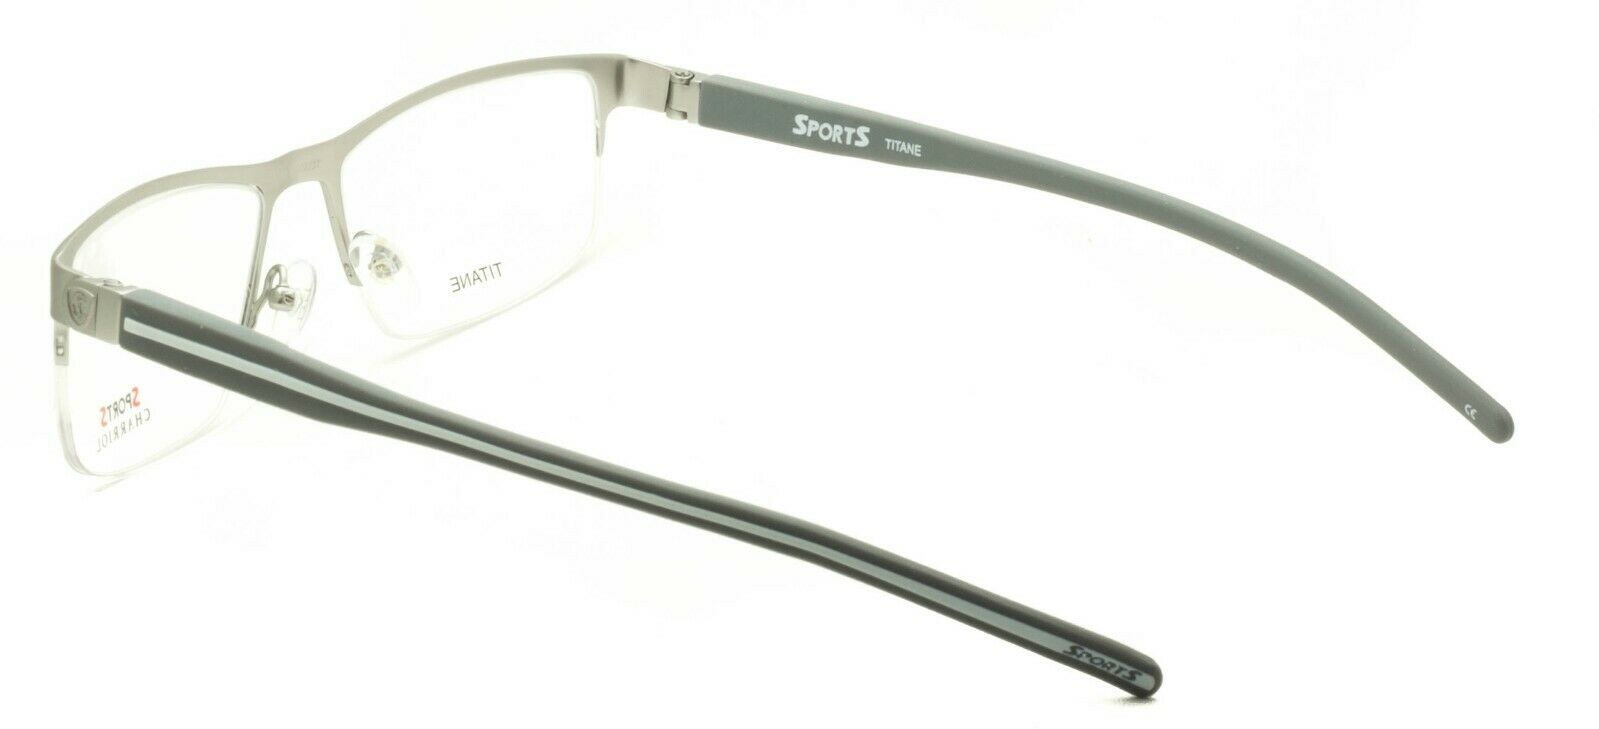 CHARRIOL SPORTS SP23052 C3 55mm FRAMES Glasses RX Optical Eyewear France - New